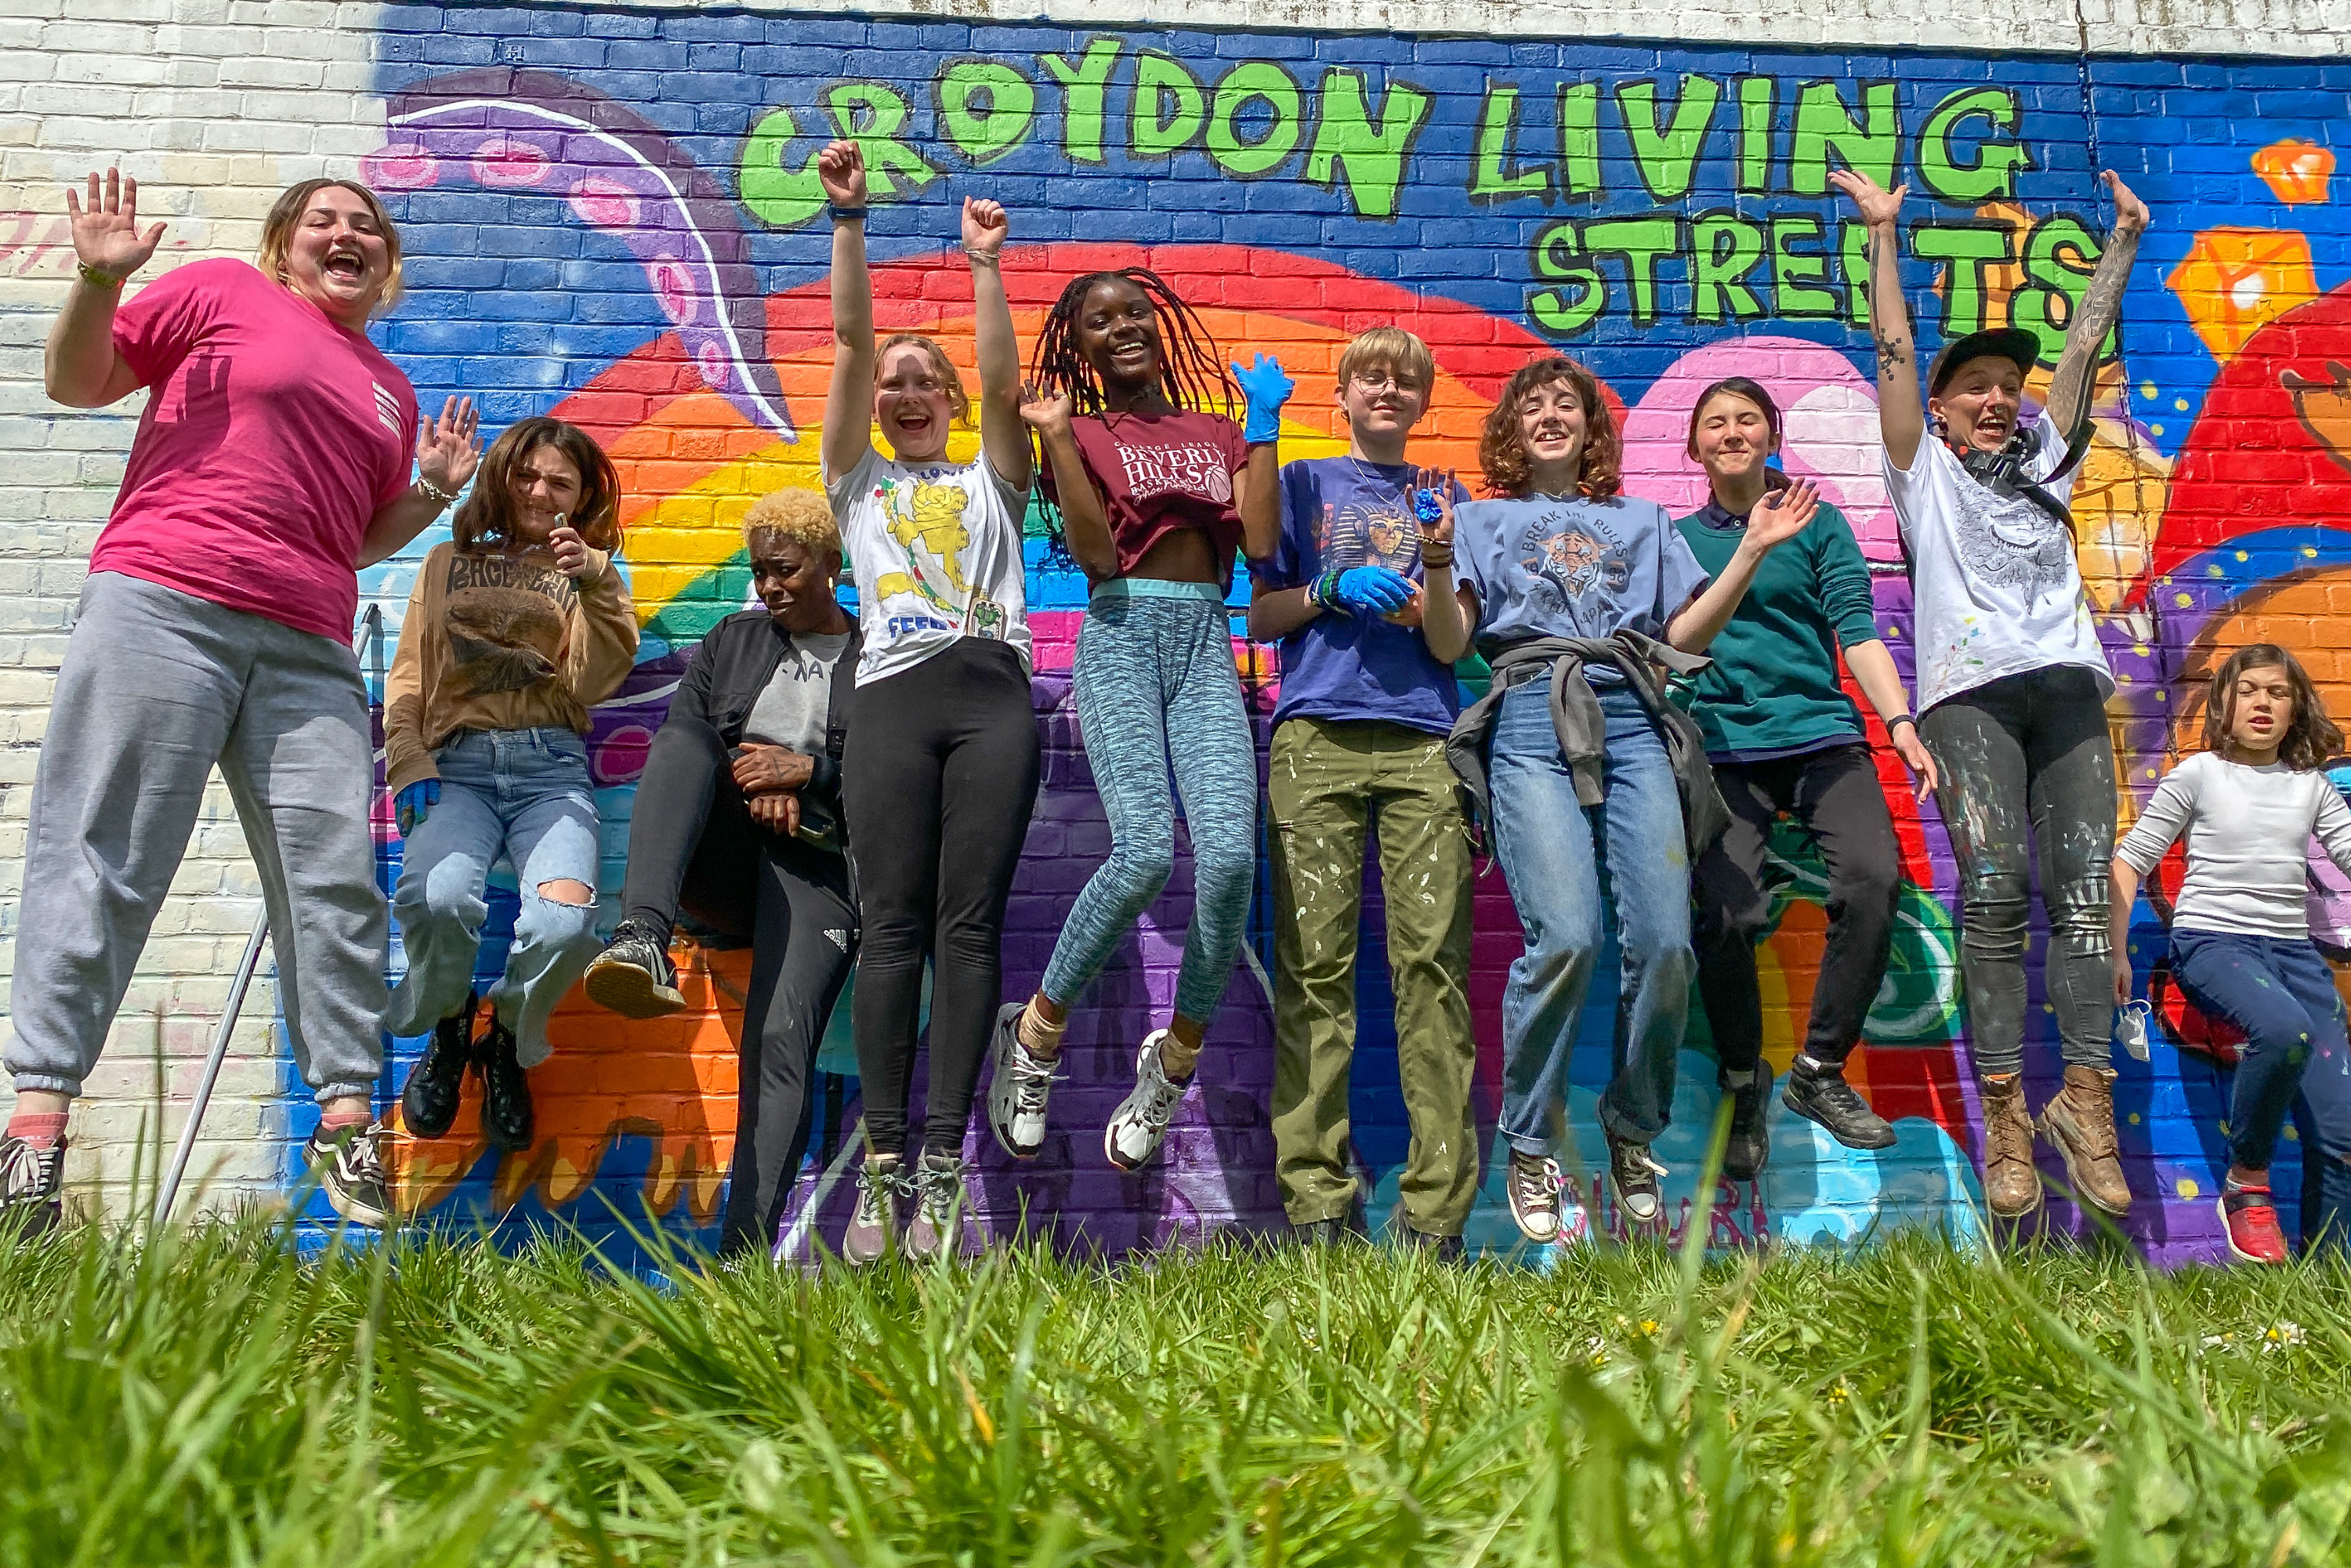 Croydon Living Streets